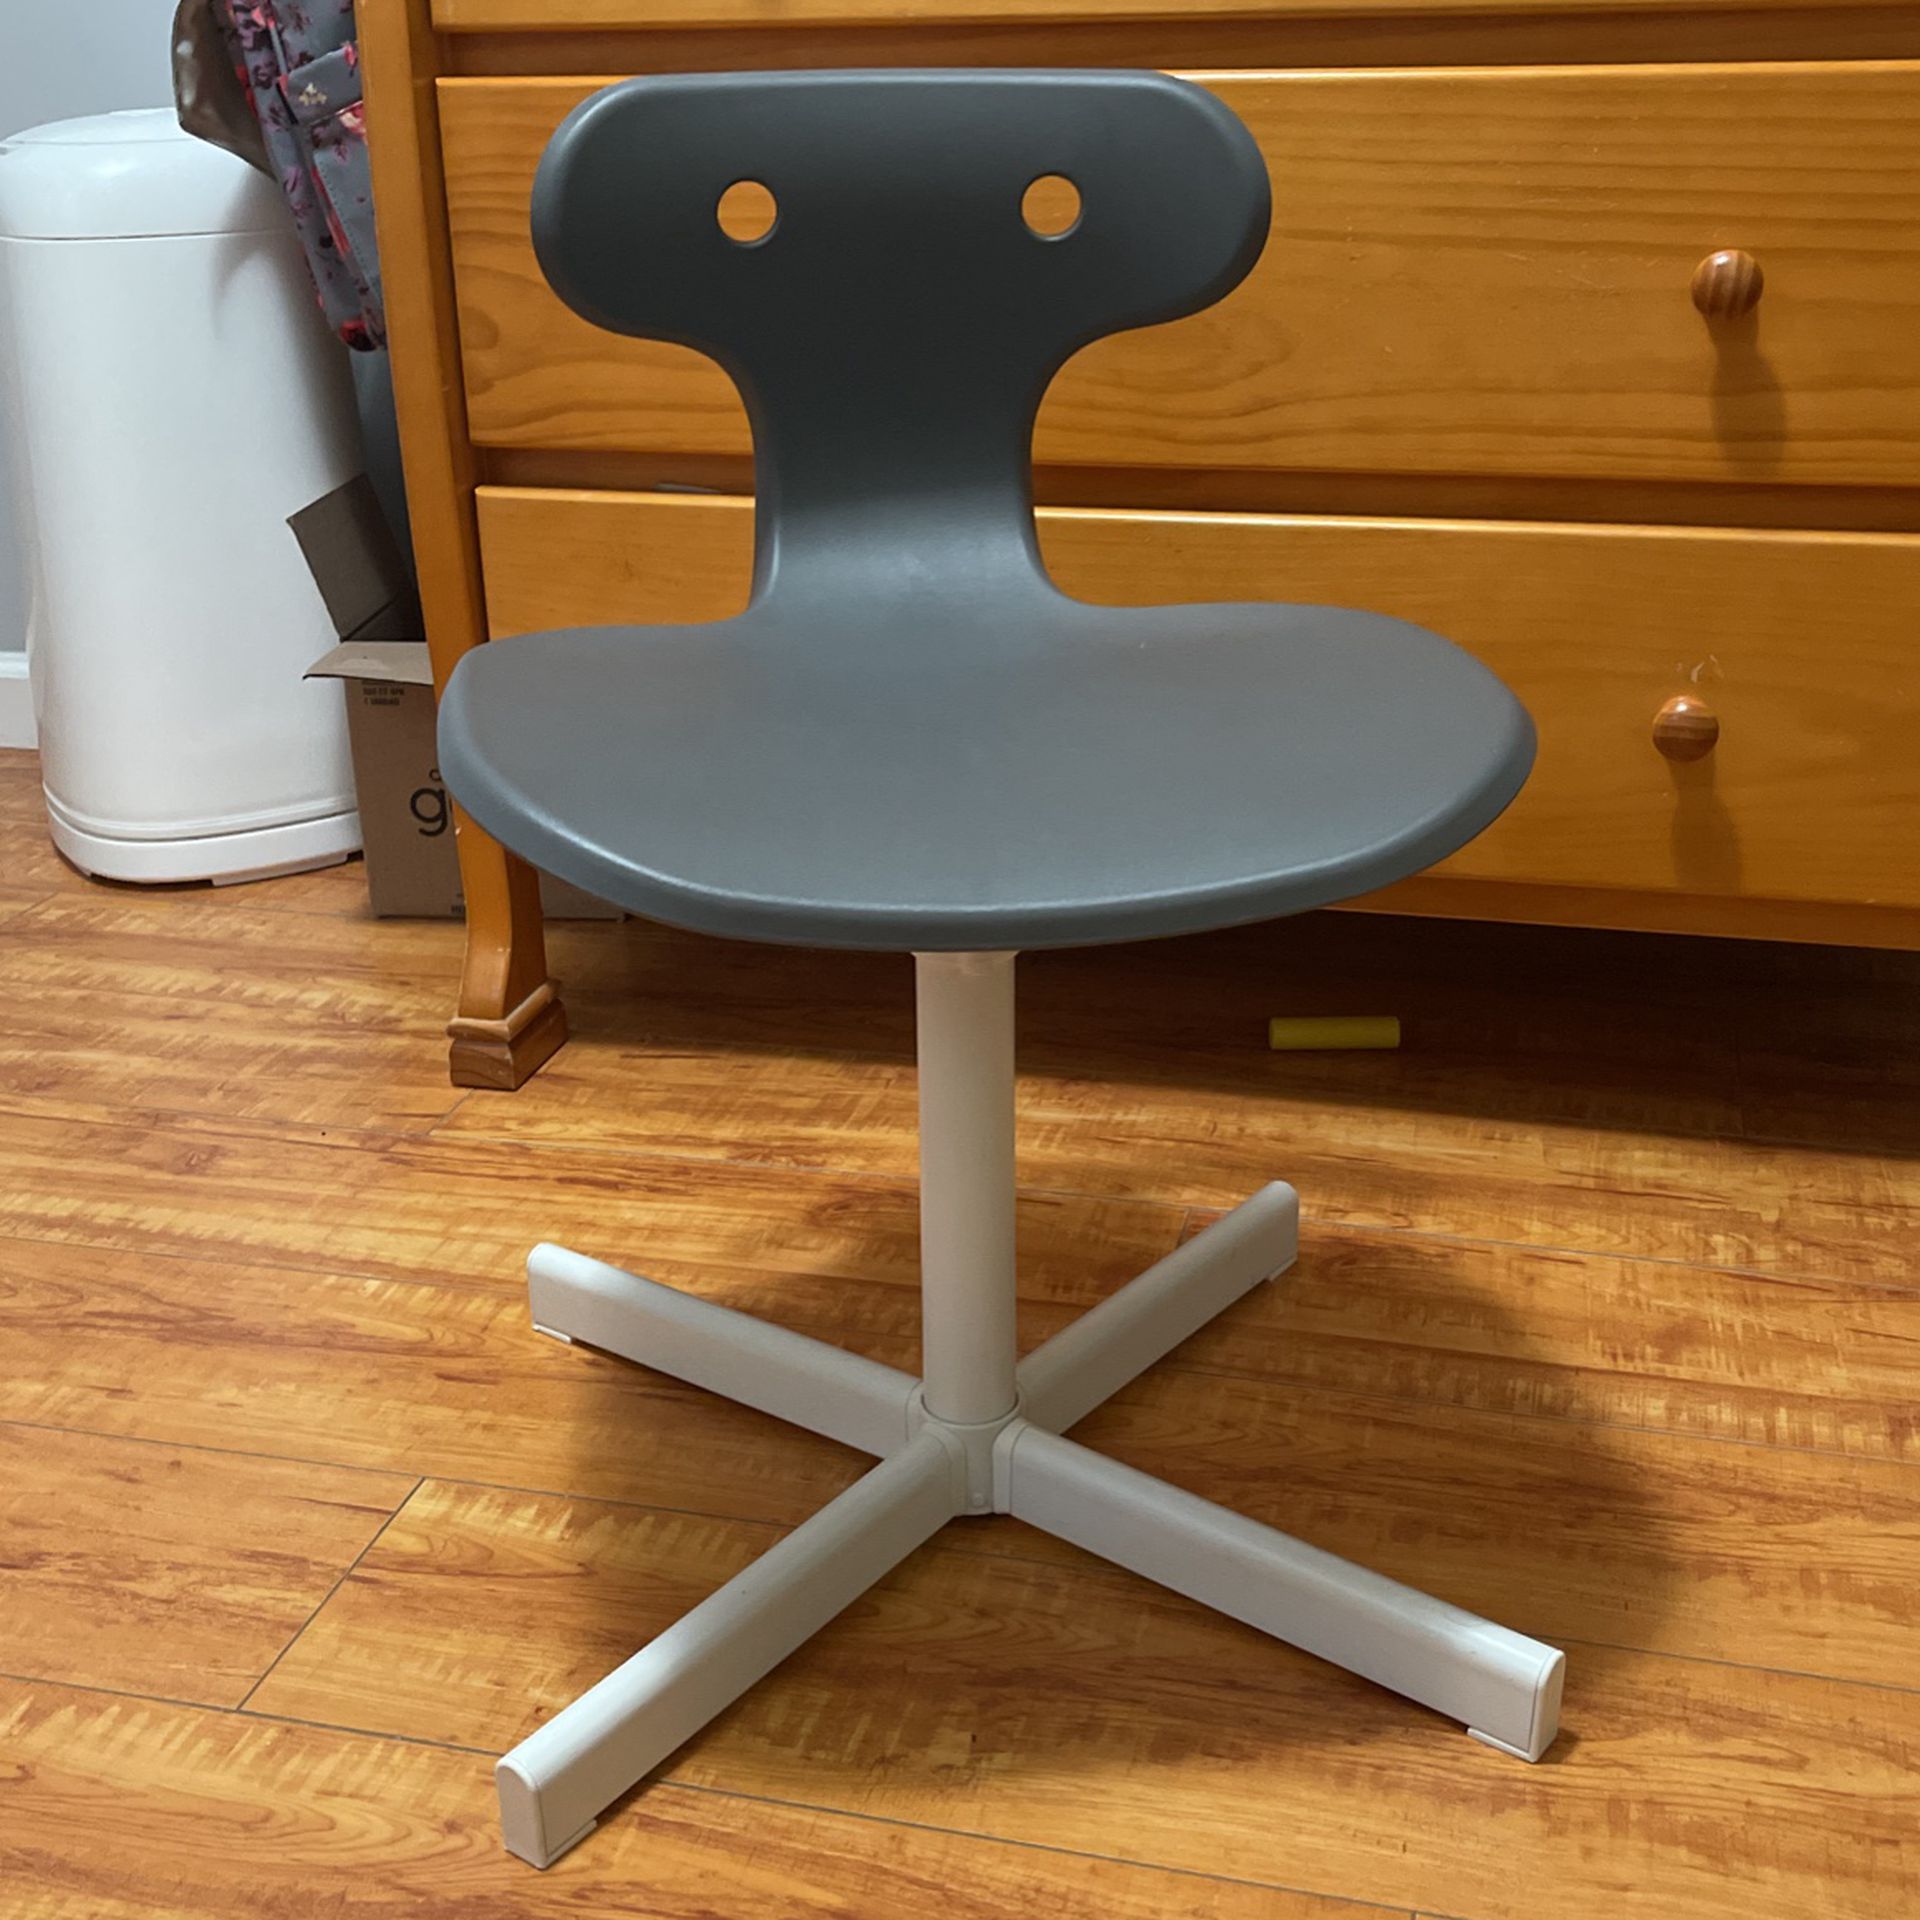 IKEA Adjustable Height Chair